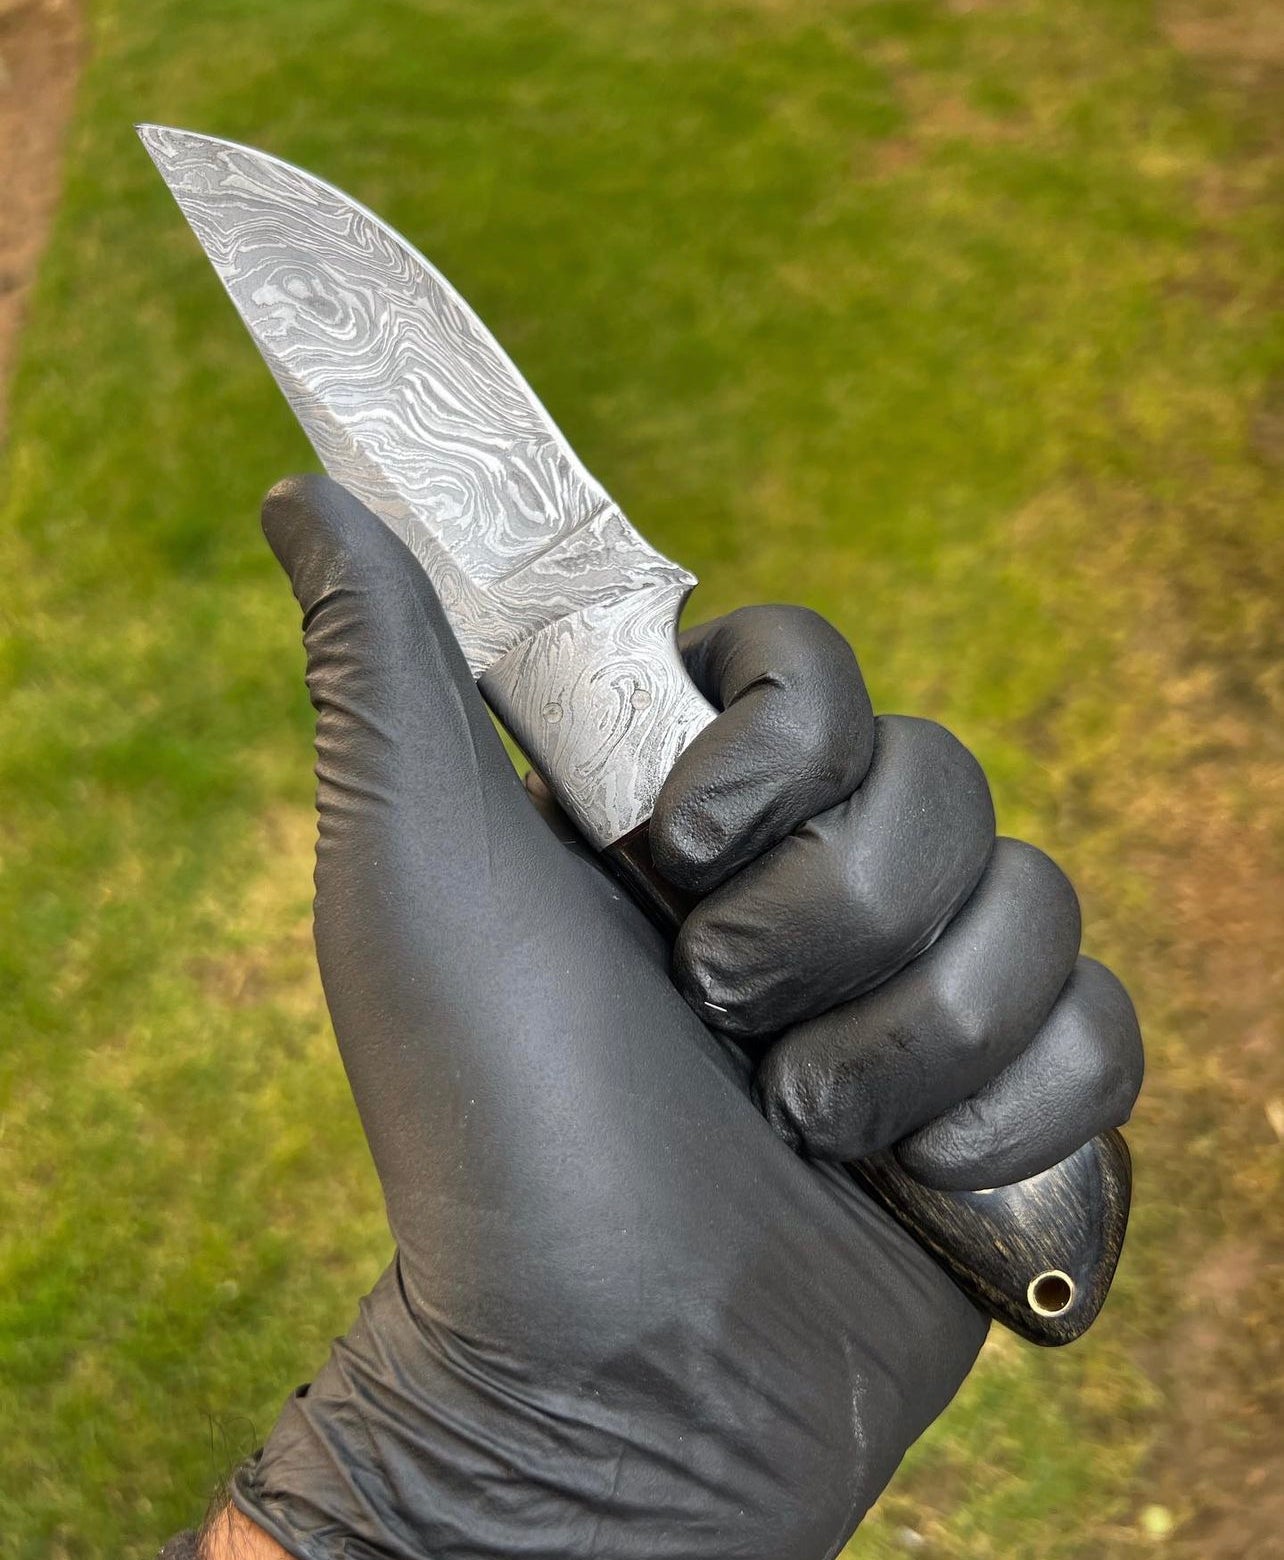 Custom Handmade Damascus Steel Fixed Blade Hunting Knife